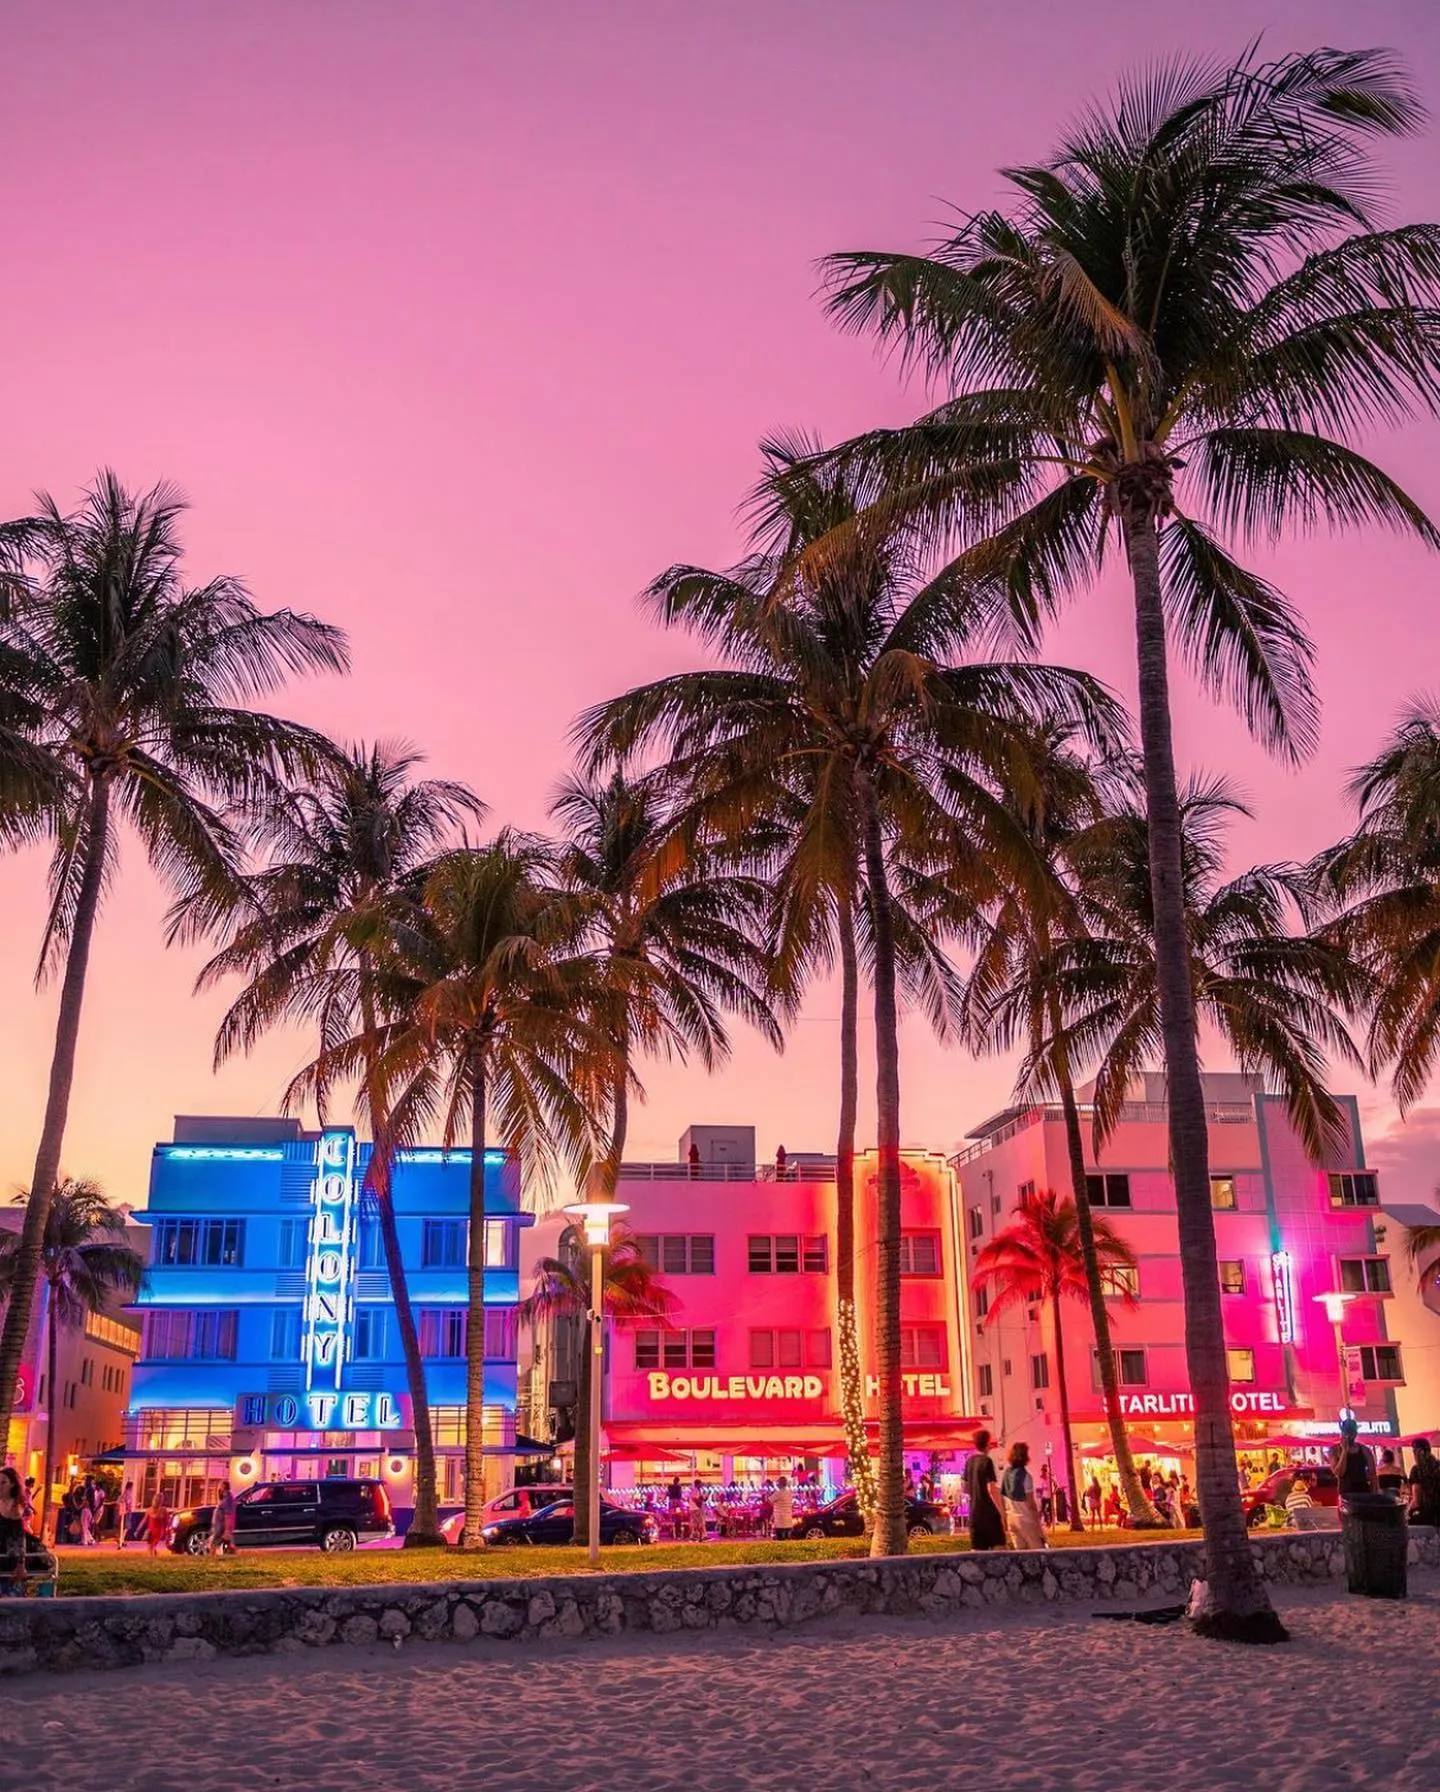 Miami - Ocean Drive has been shining bright all Summer long